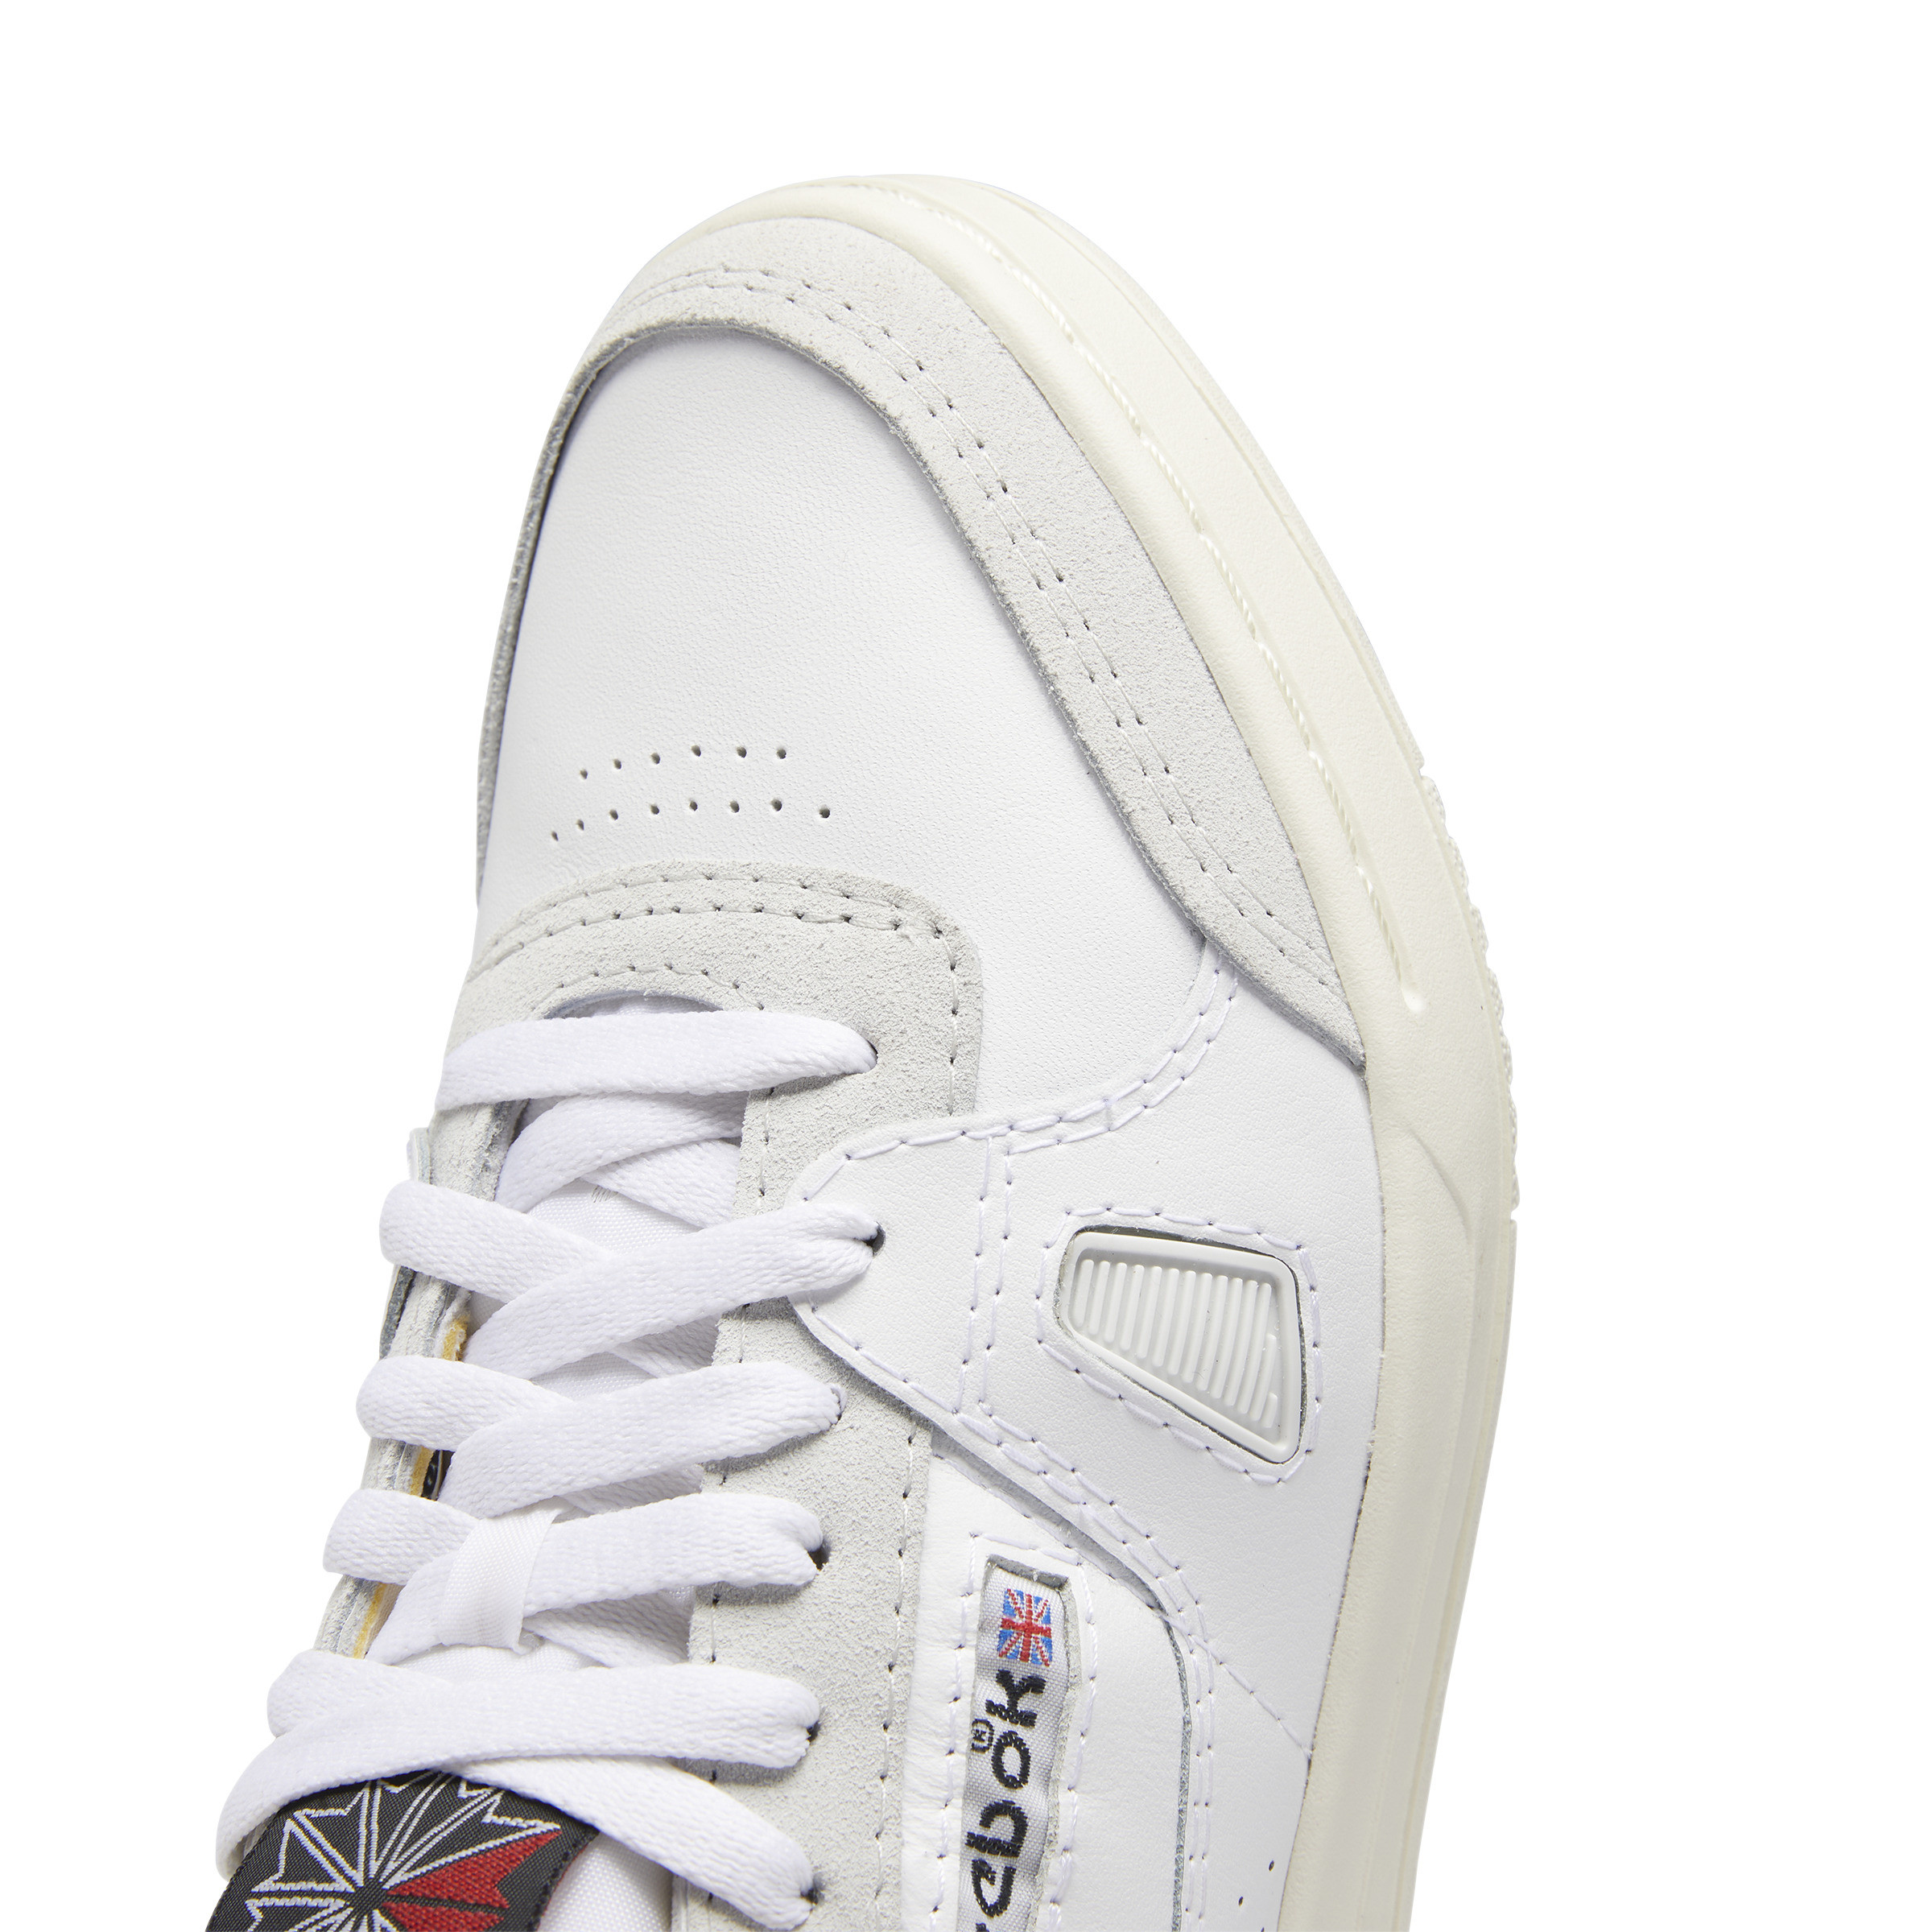 Reebok - LT Court shoes, White, large image number 6